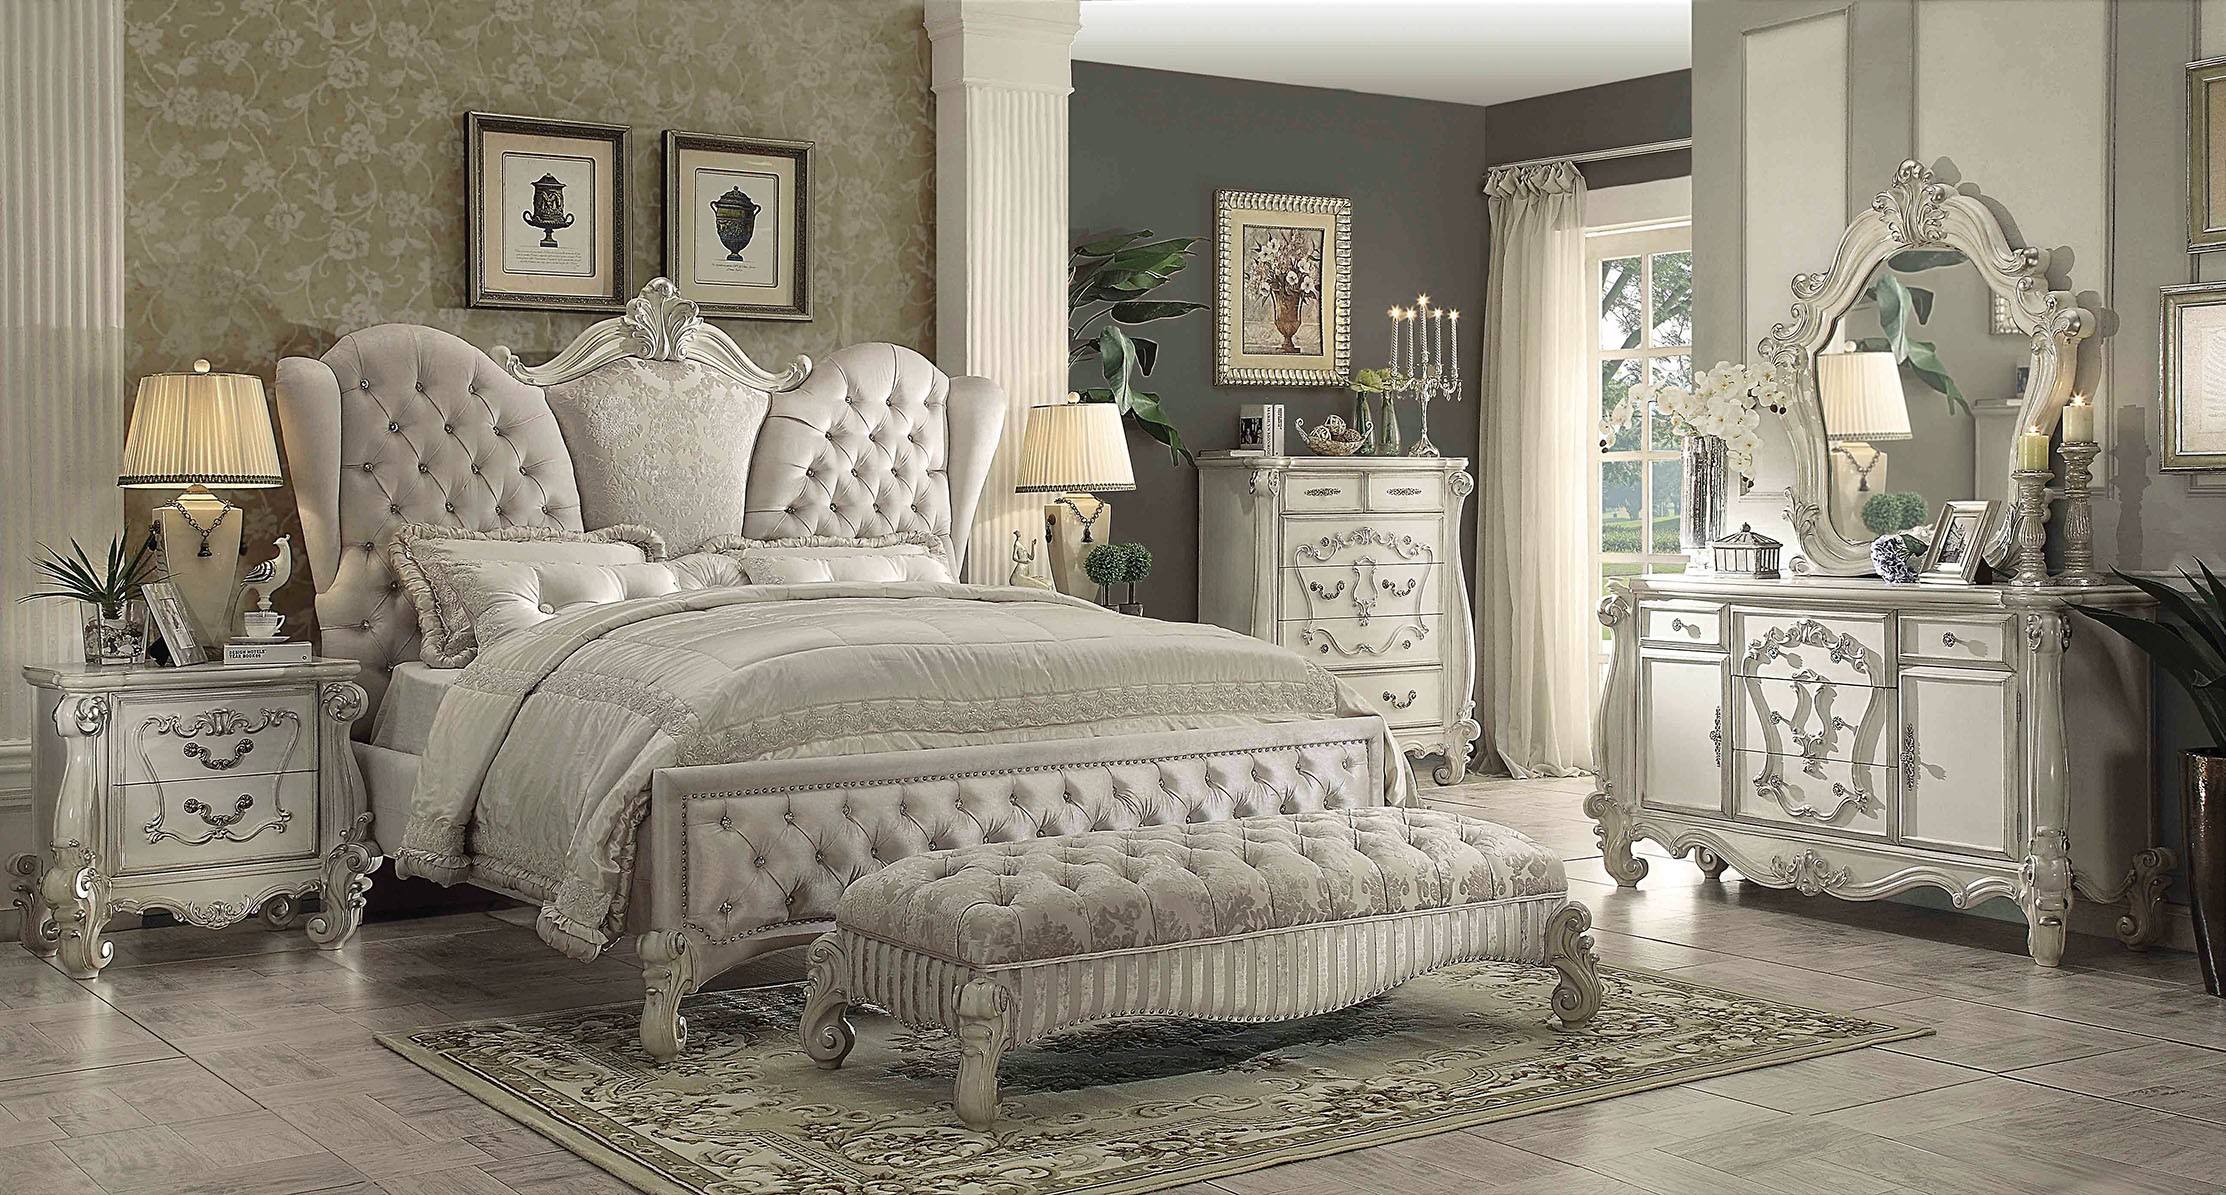 First Rate White King Bedroom Furniture Set Dark Brown Sets And Wood regarding measurements 2226 X 1195